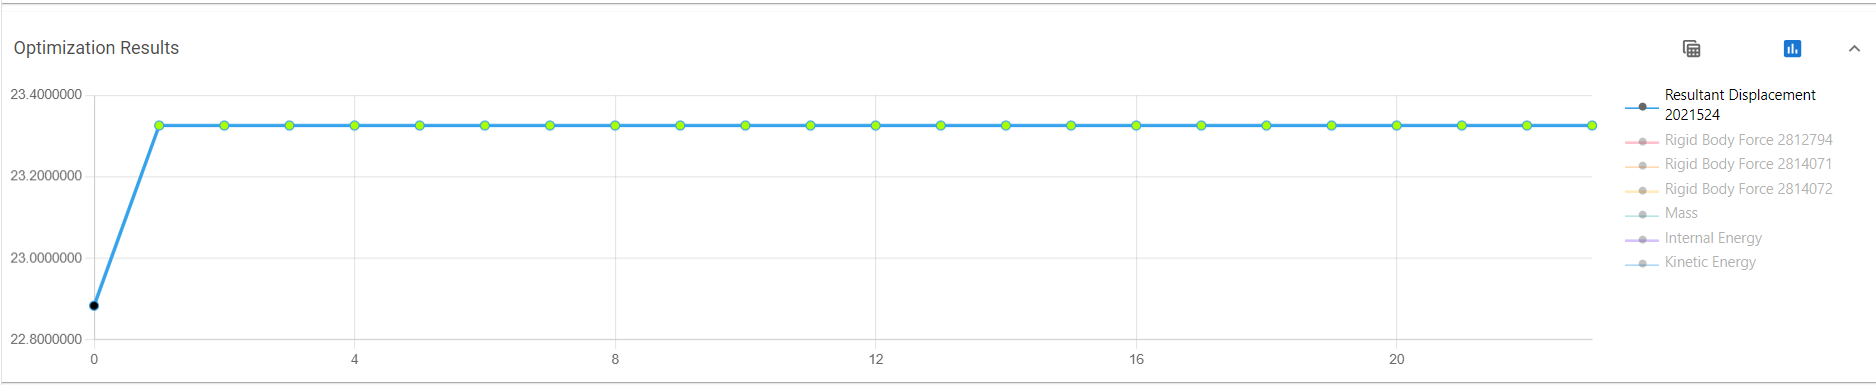 Optimization Results - Chart View